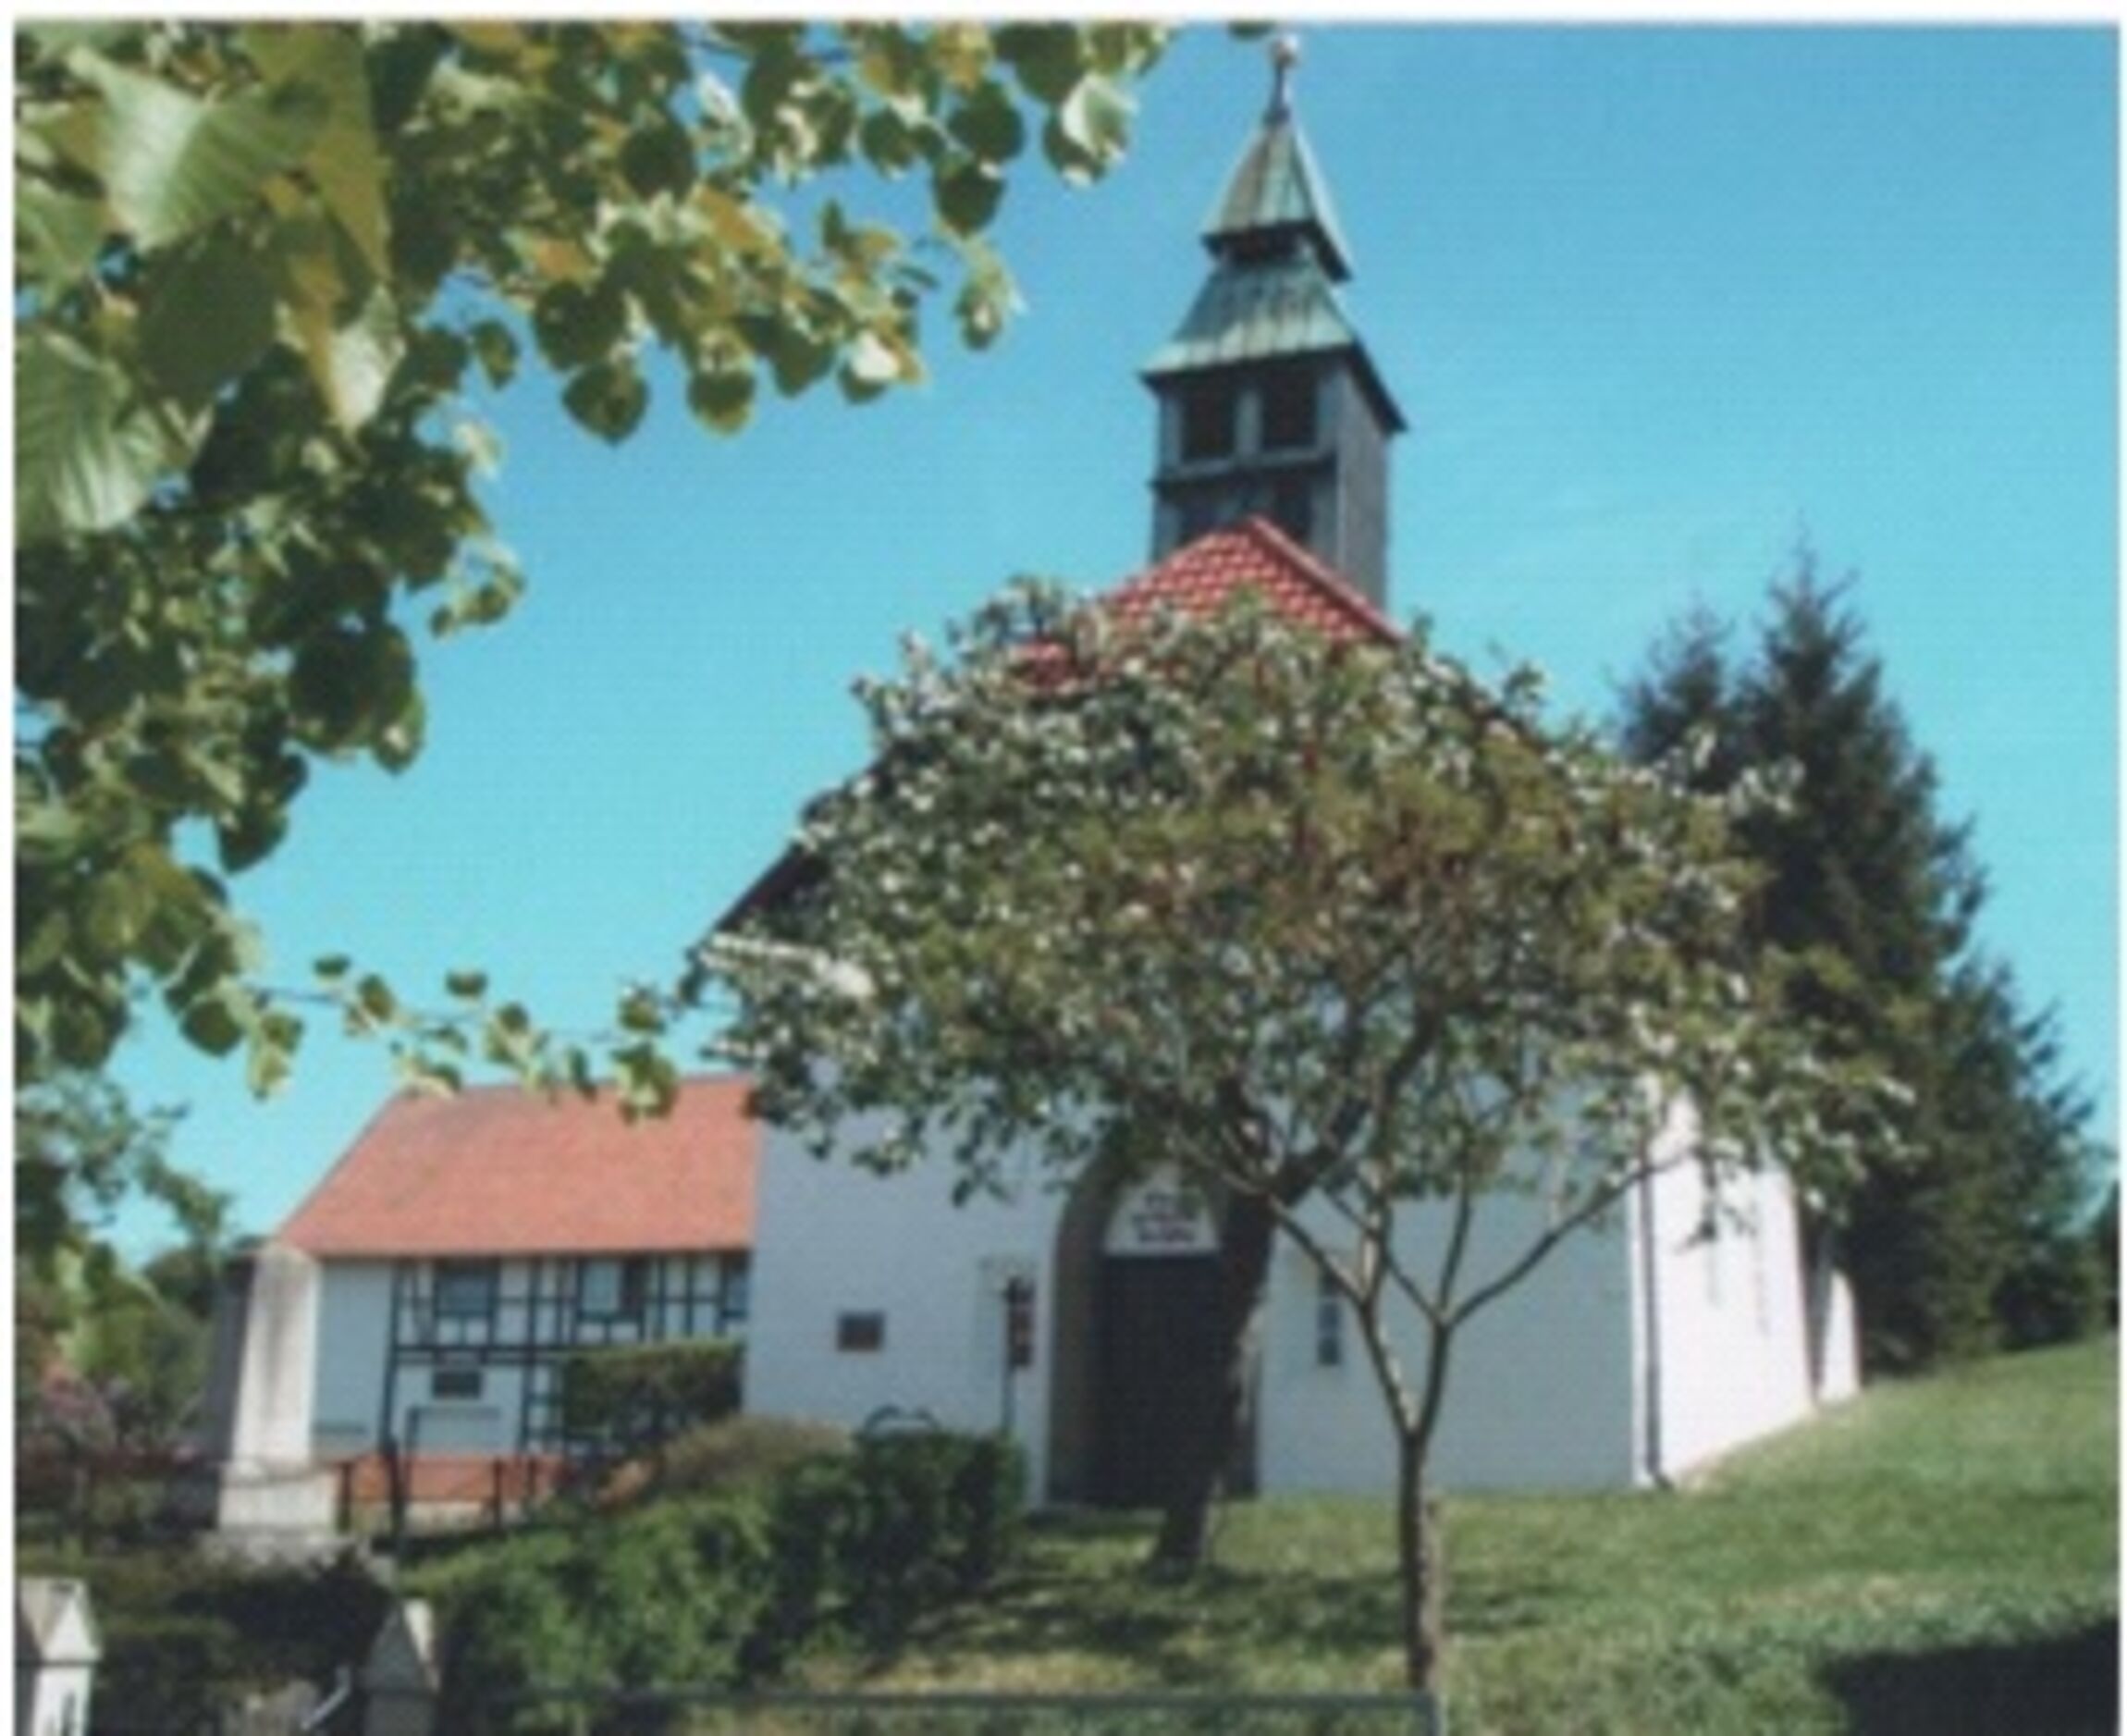 St. Pankratius-Kirche Denkershausen